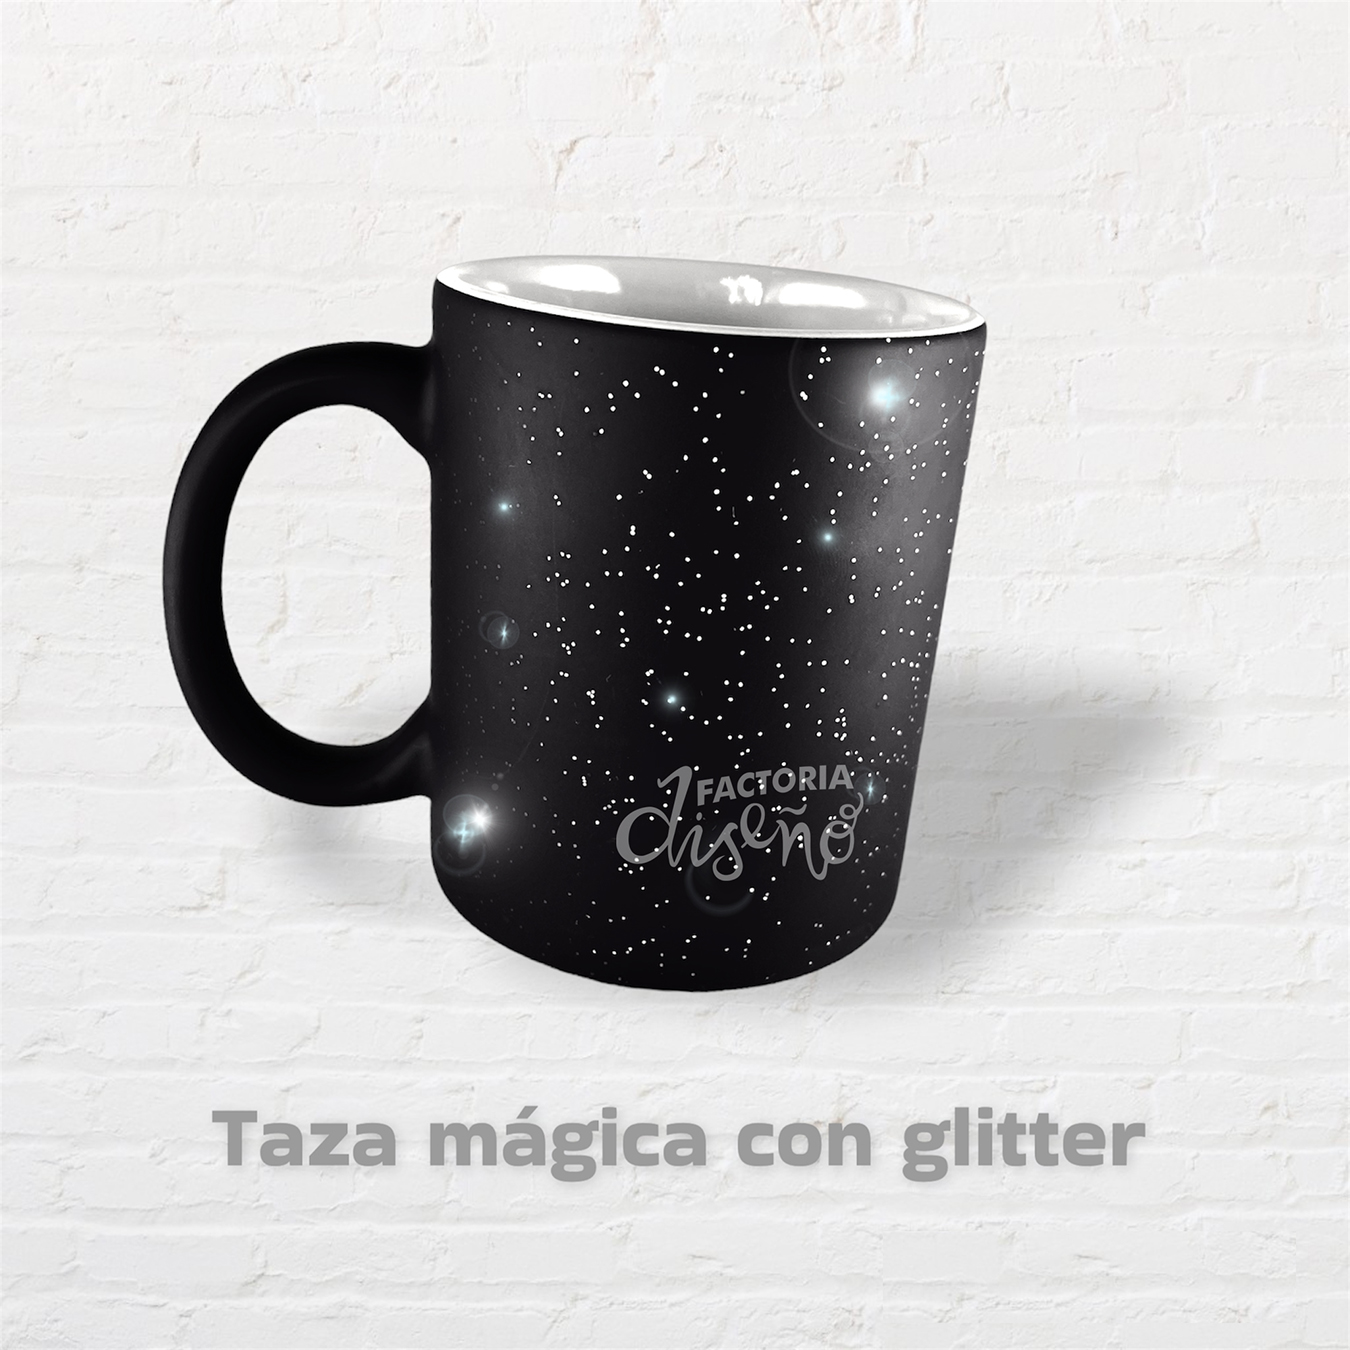 Taza mágica glitter - Factoría Diseño